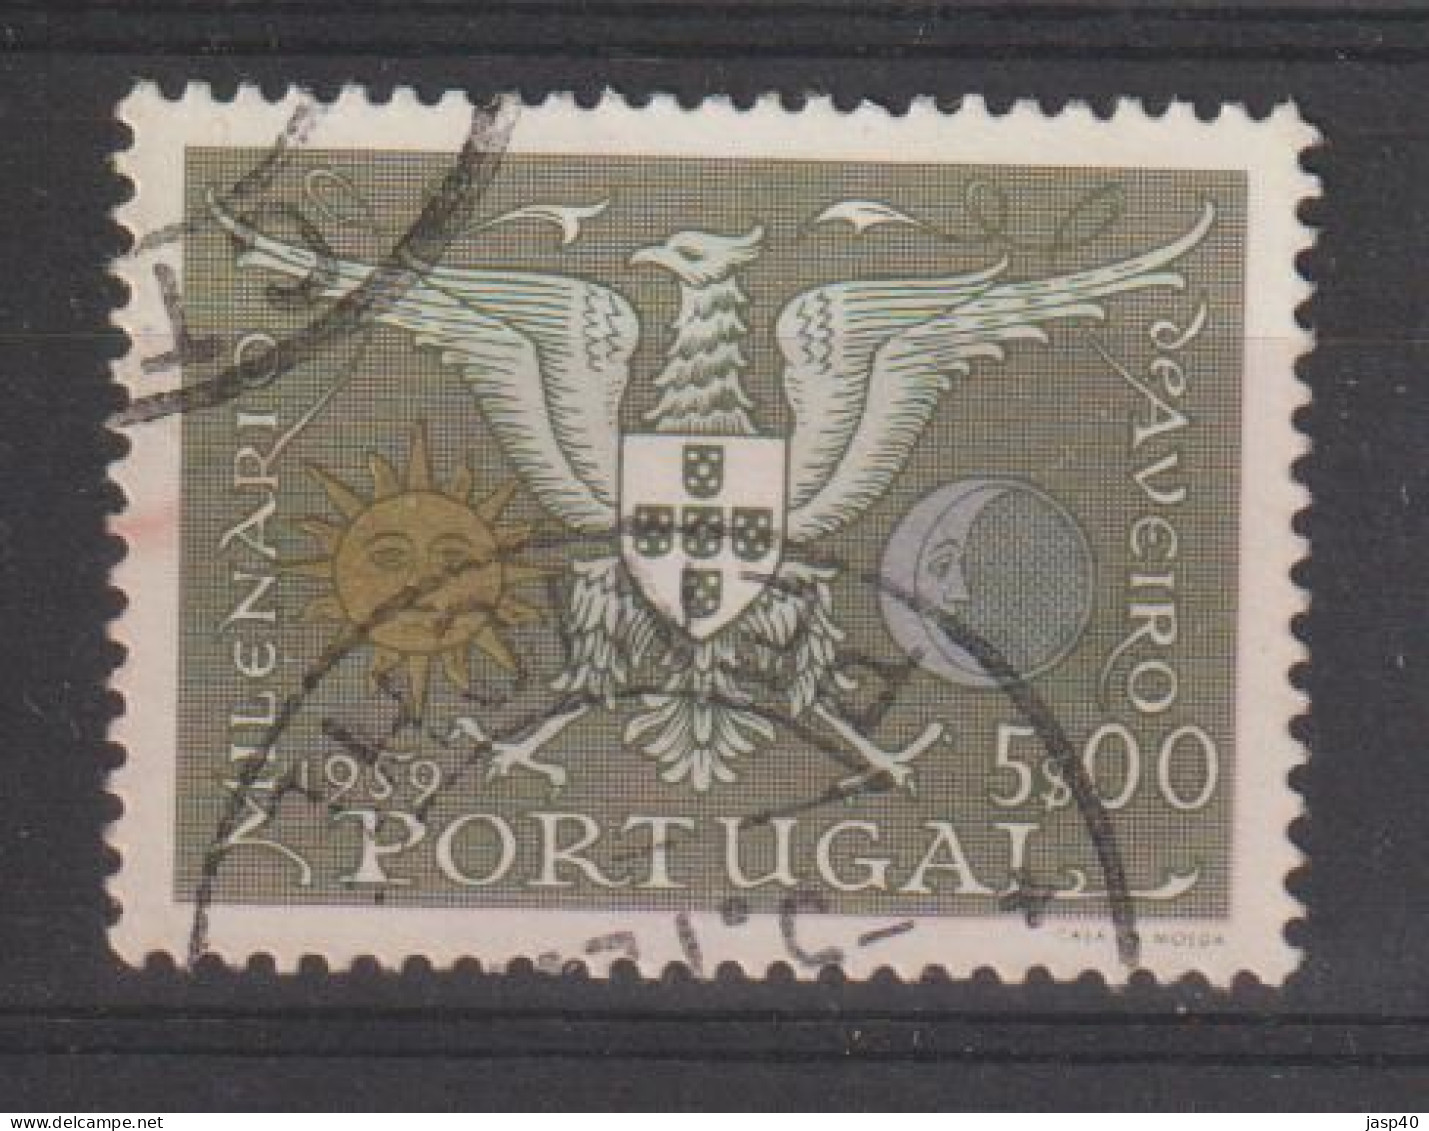 PORTUGAL 848 - POSTMARKS OF PORTUGAL - PENICHE - Usado